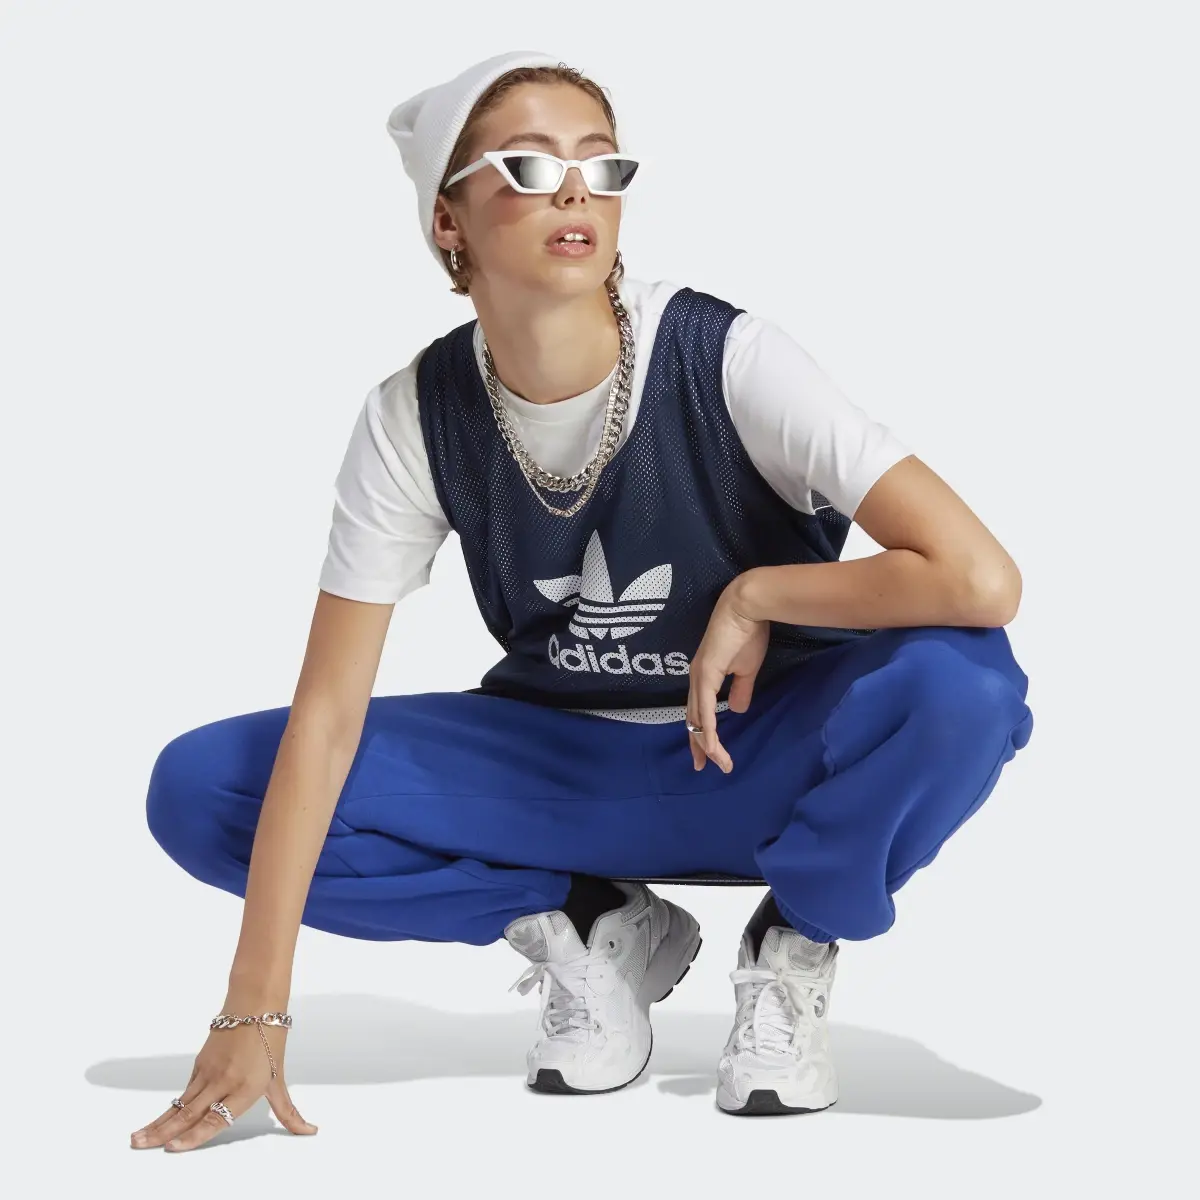 Adidas Essentials Fleece Jogginghose. 3